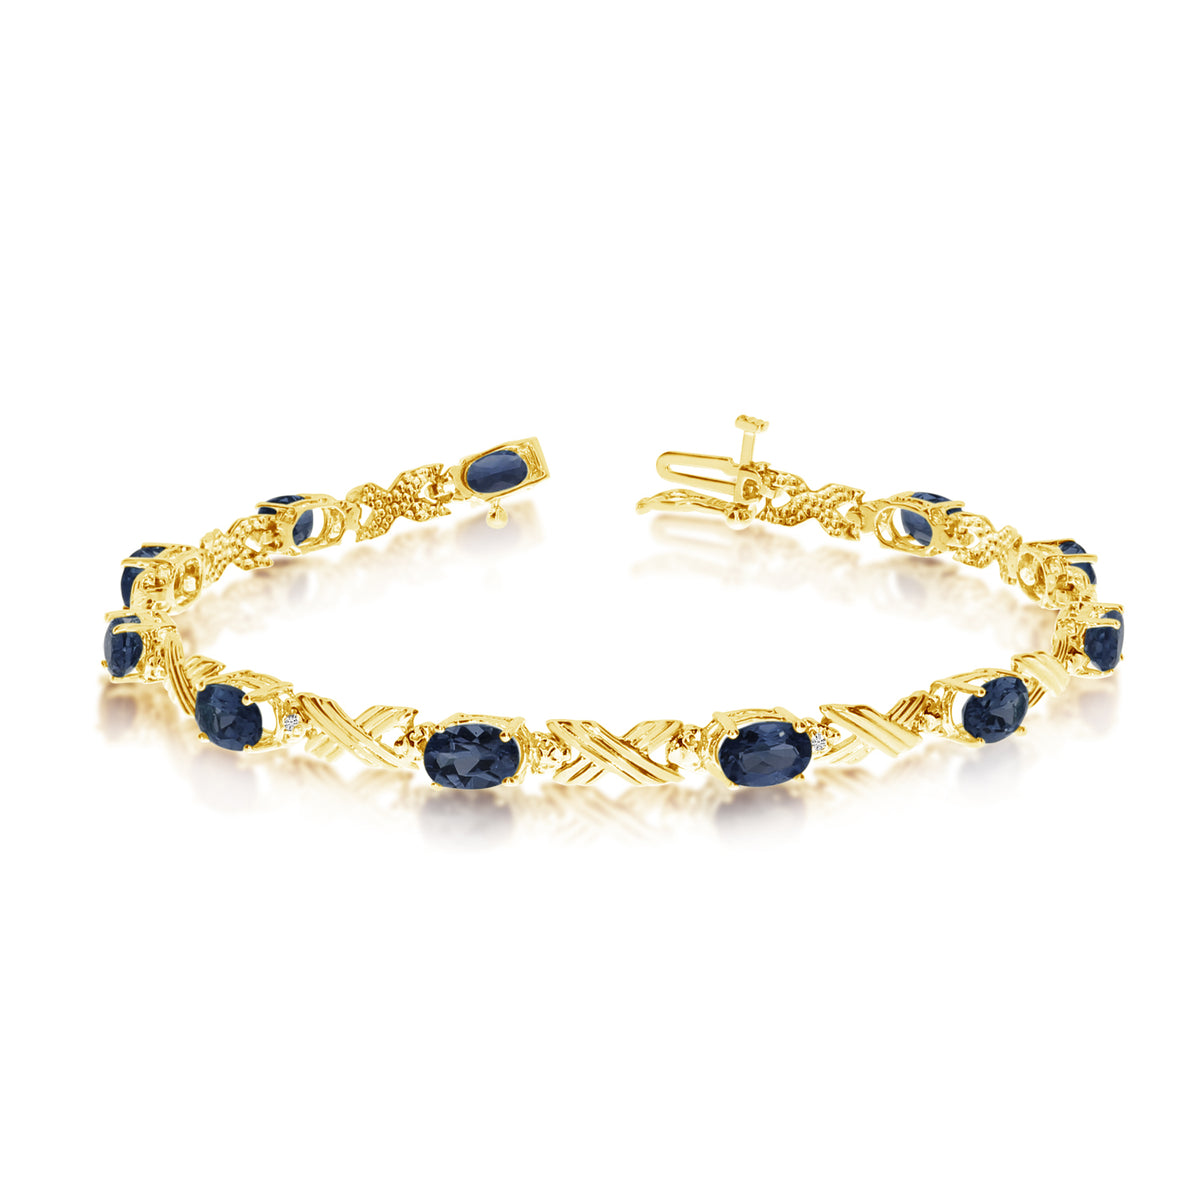 10K Yellow Gold Oval Sapphire Stones And Diamonds Tennis Bracelet, 7" fine designer jewelry for men and women